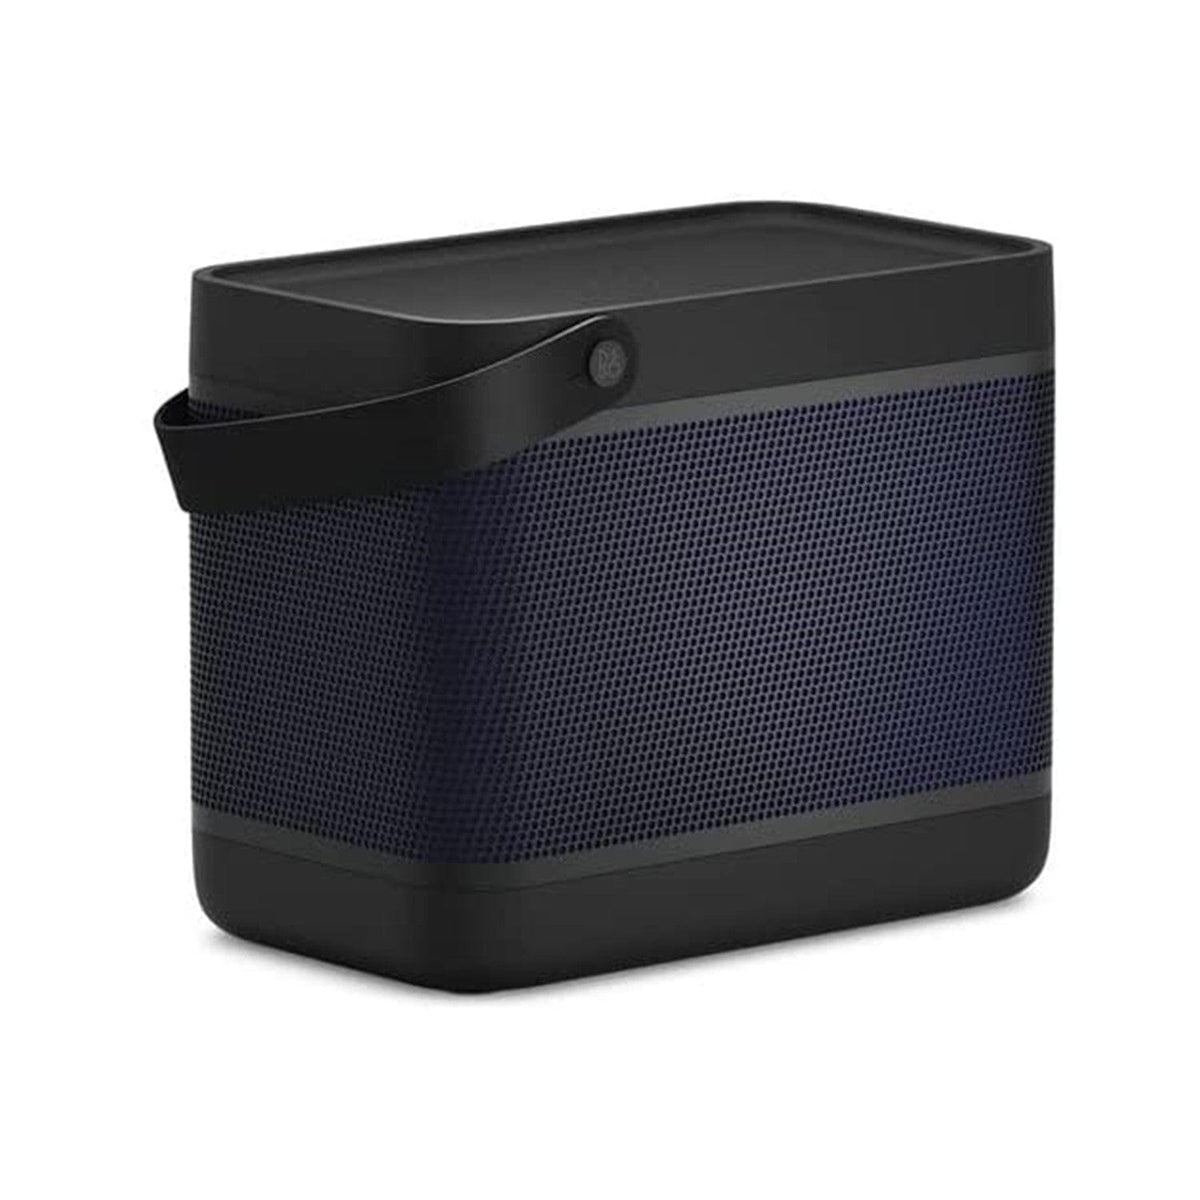 B&O Bang & Olufsen Beolit 20 Wireless Bluetooth Speaker Black Anthracite